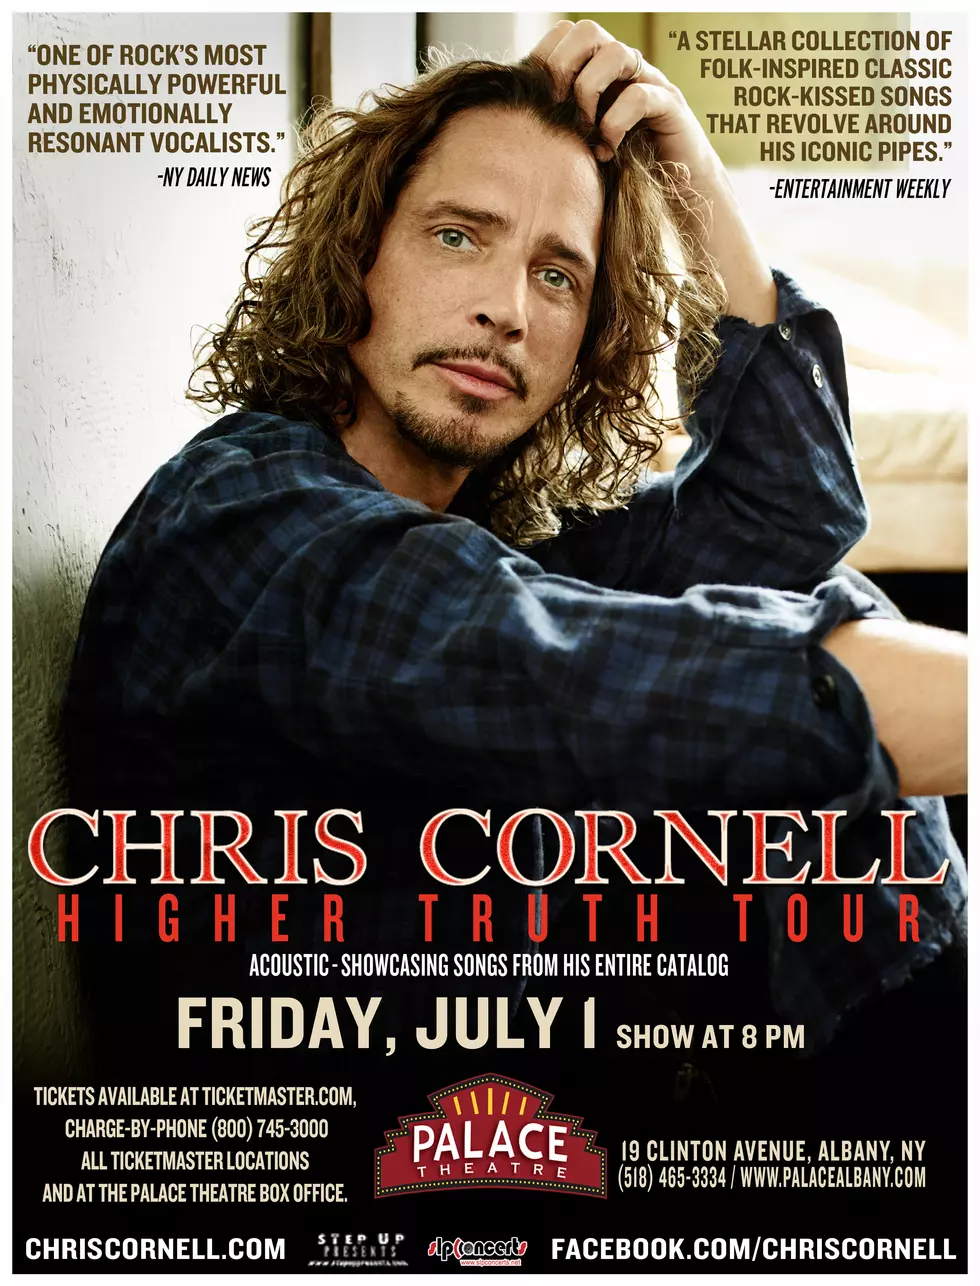 Remembering Chris Cornell